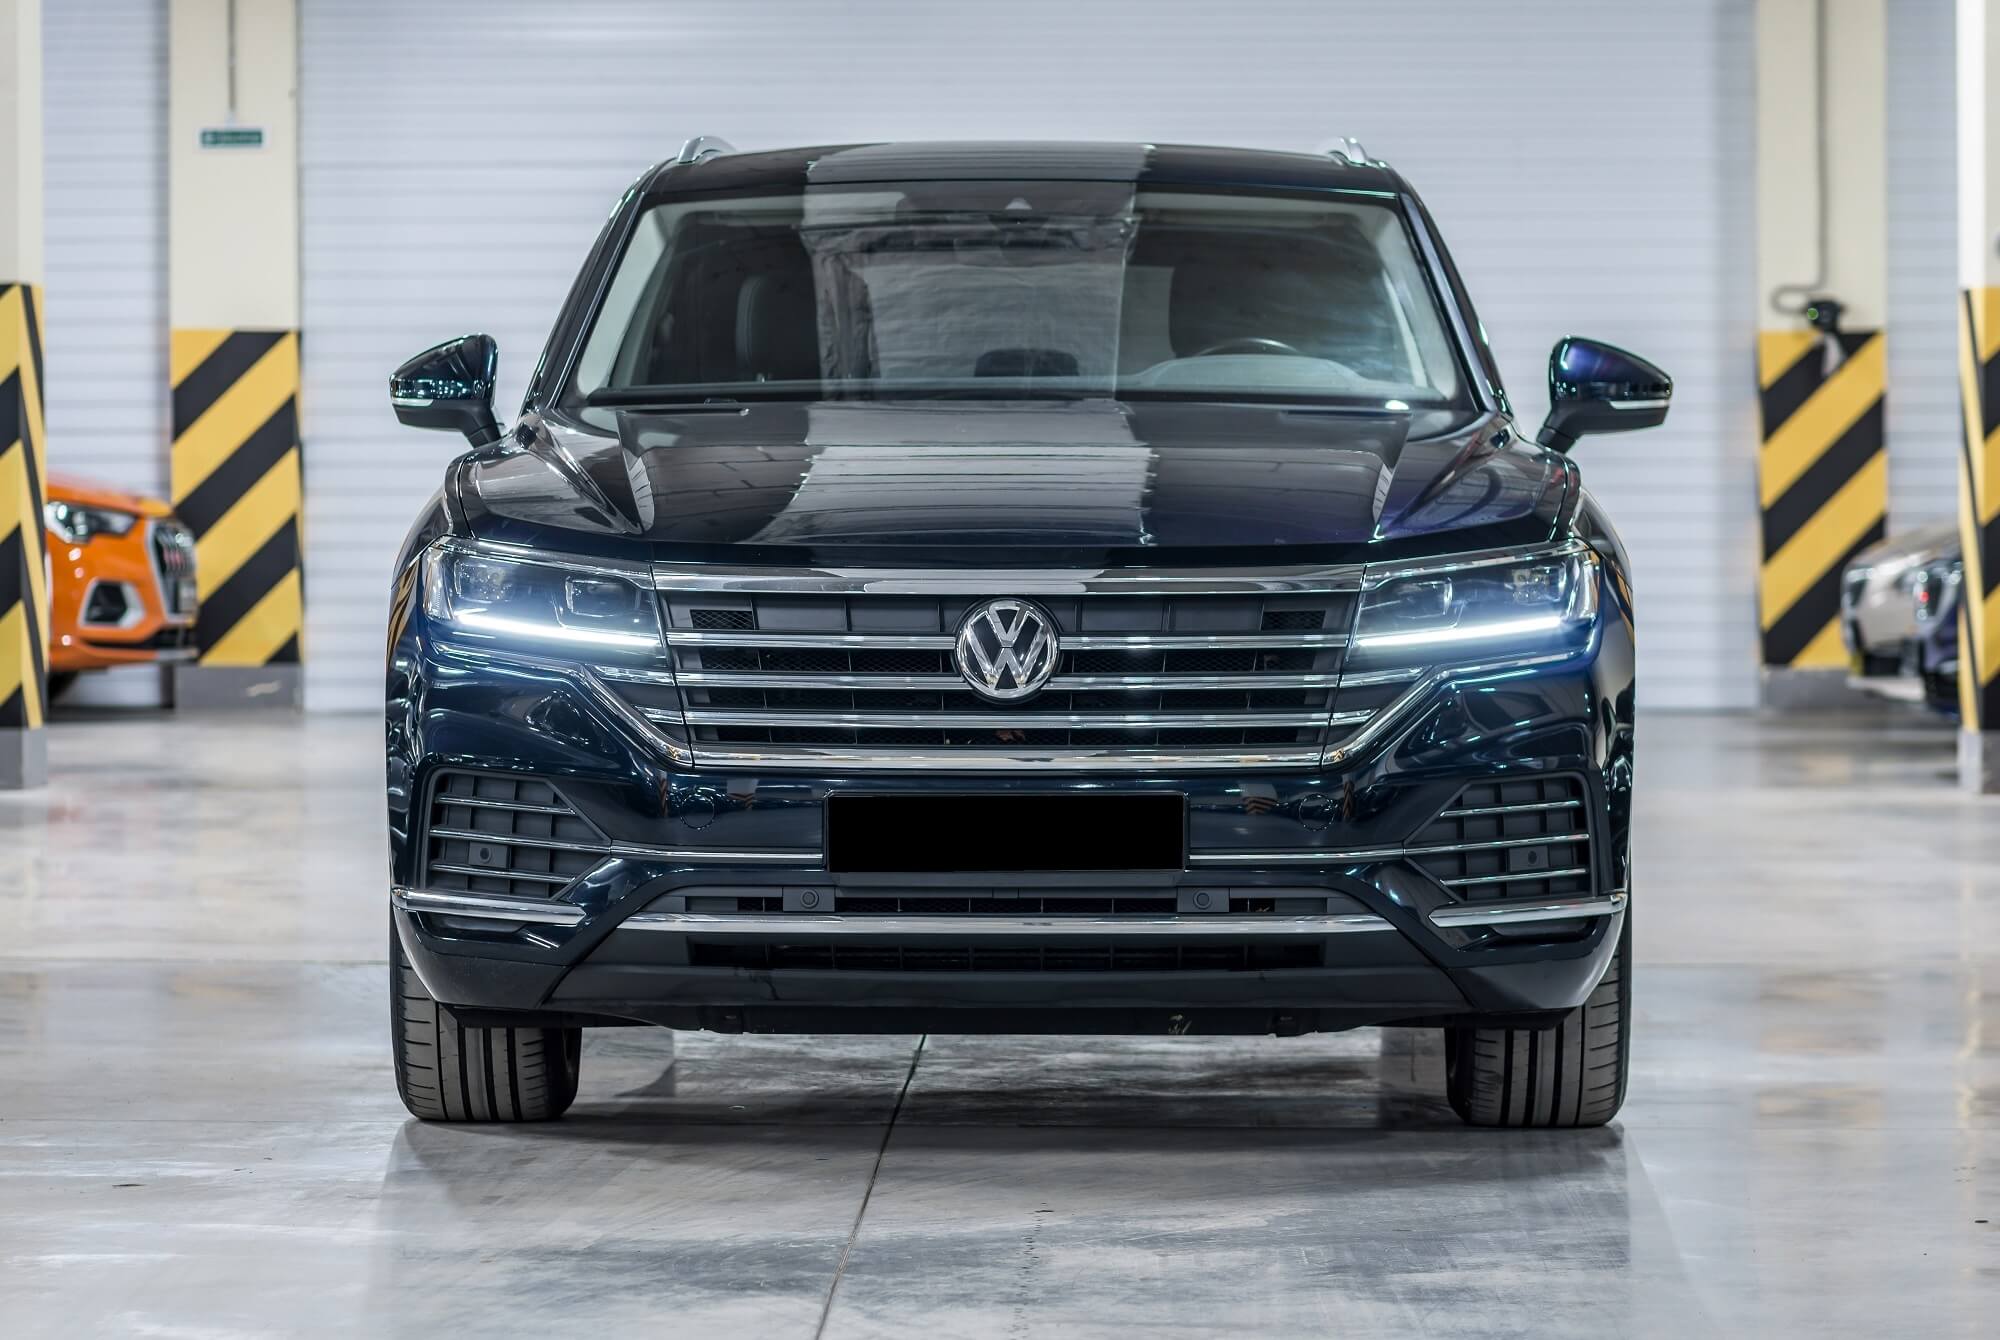 Hyr Volkswagen i Dubai